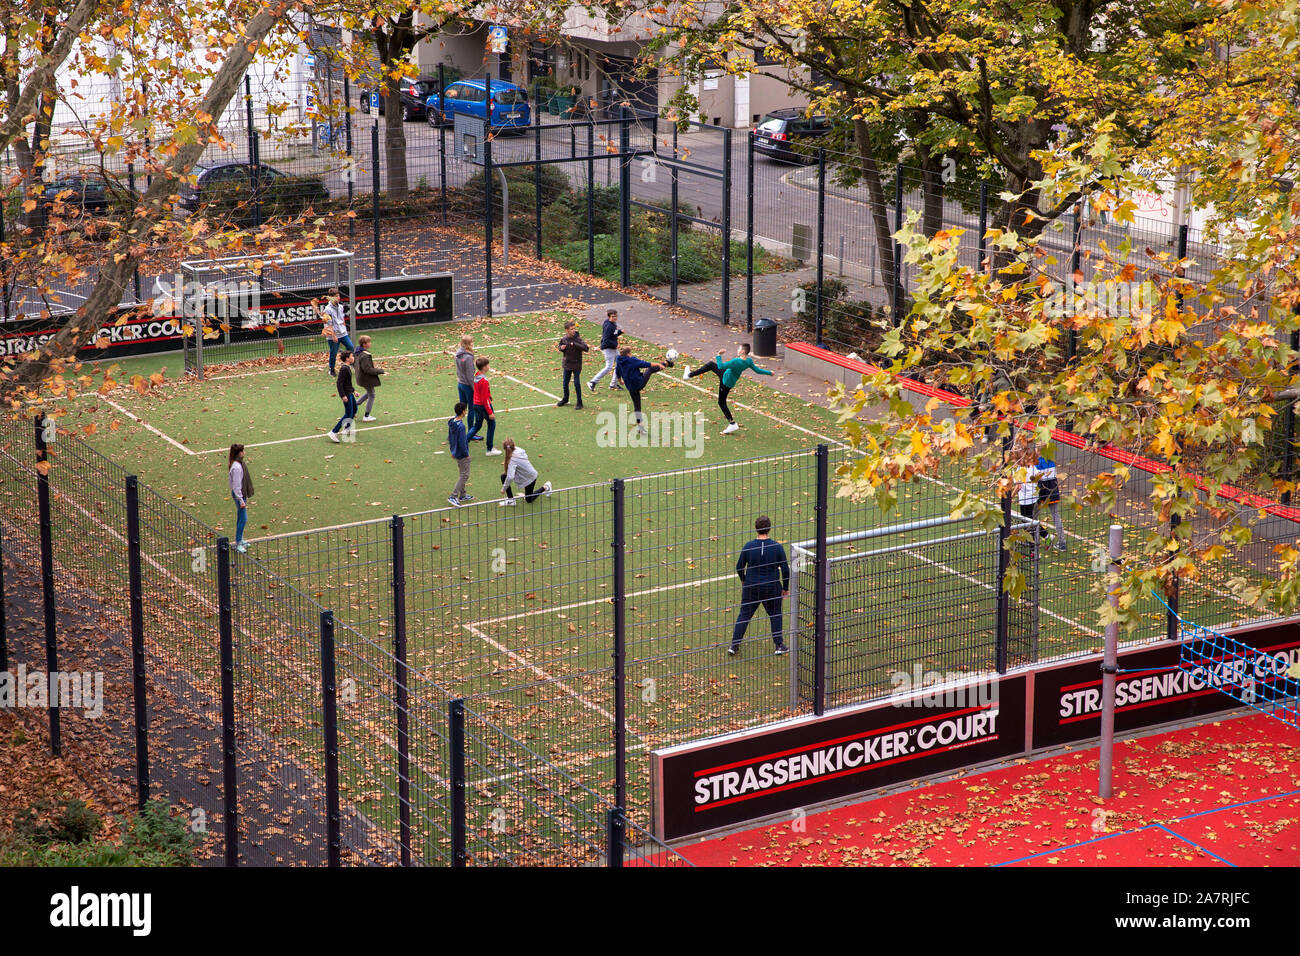 a public football pitch, called Strassekicker Court, built by the Lukas Podolski Foundation at the Holzmarkt, Cologne, Germany.  ein von der Lukas-Pod Stock Photo